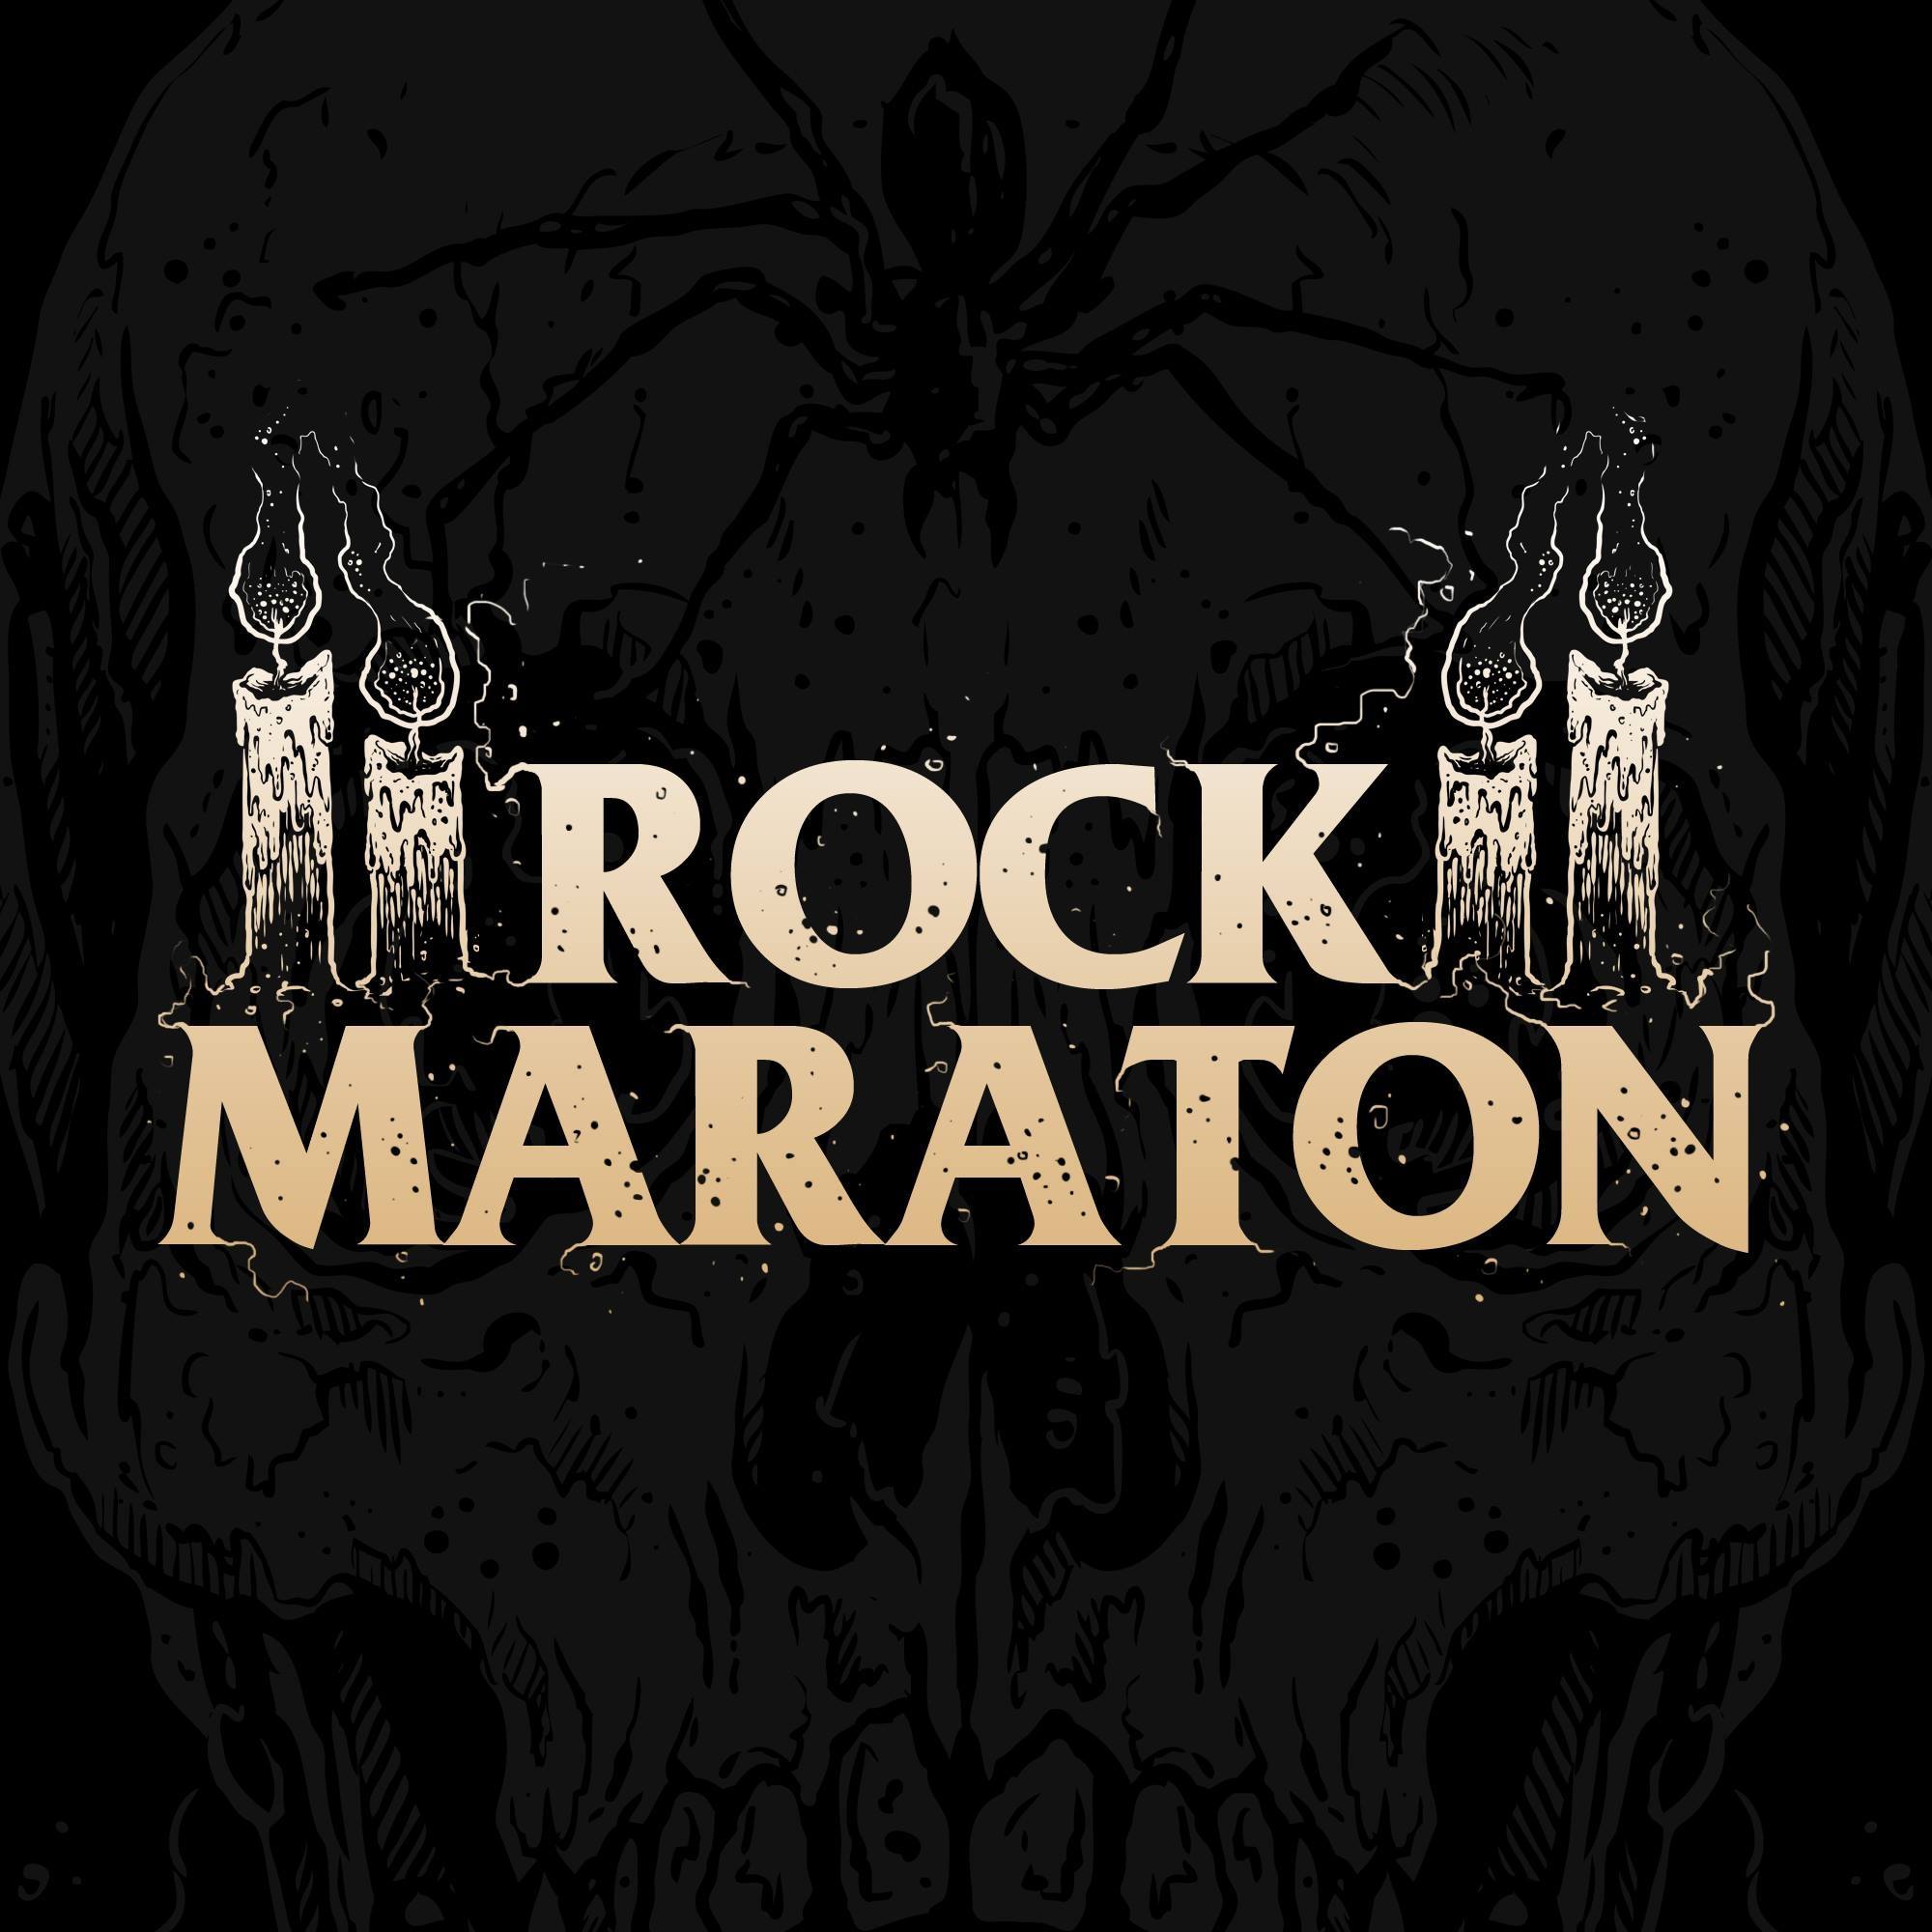 Rockmaraton